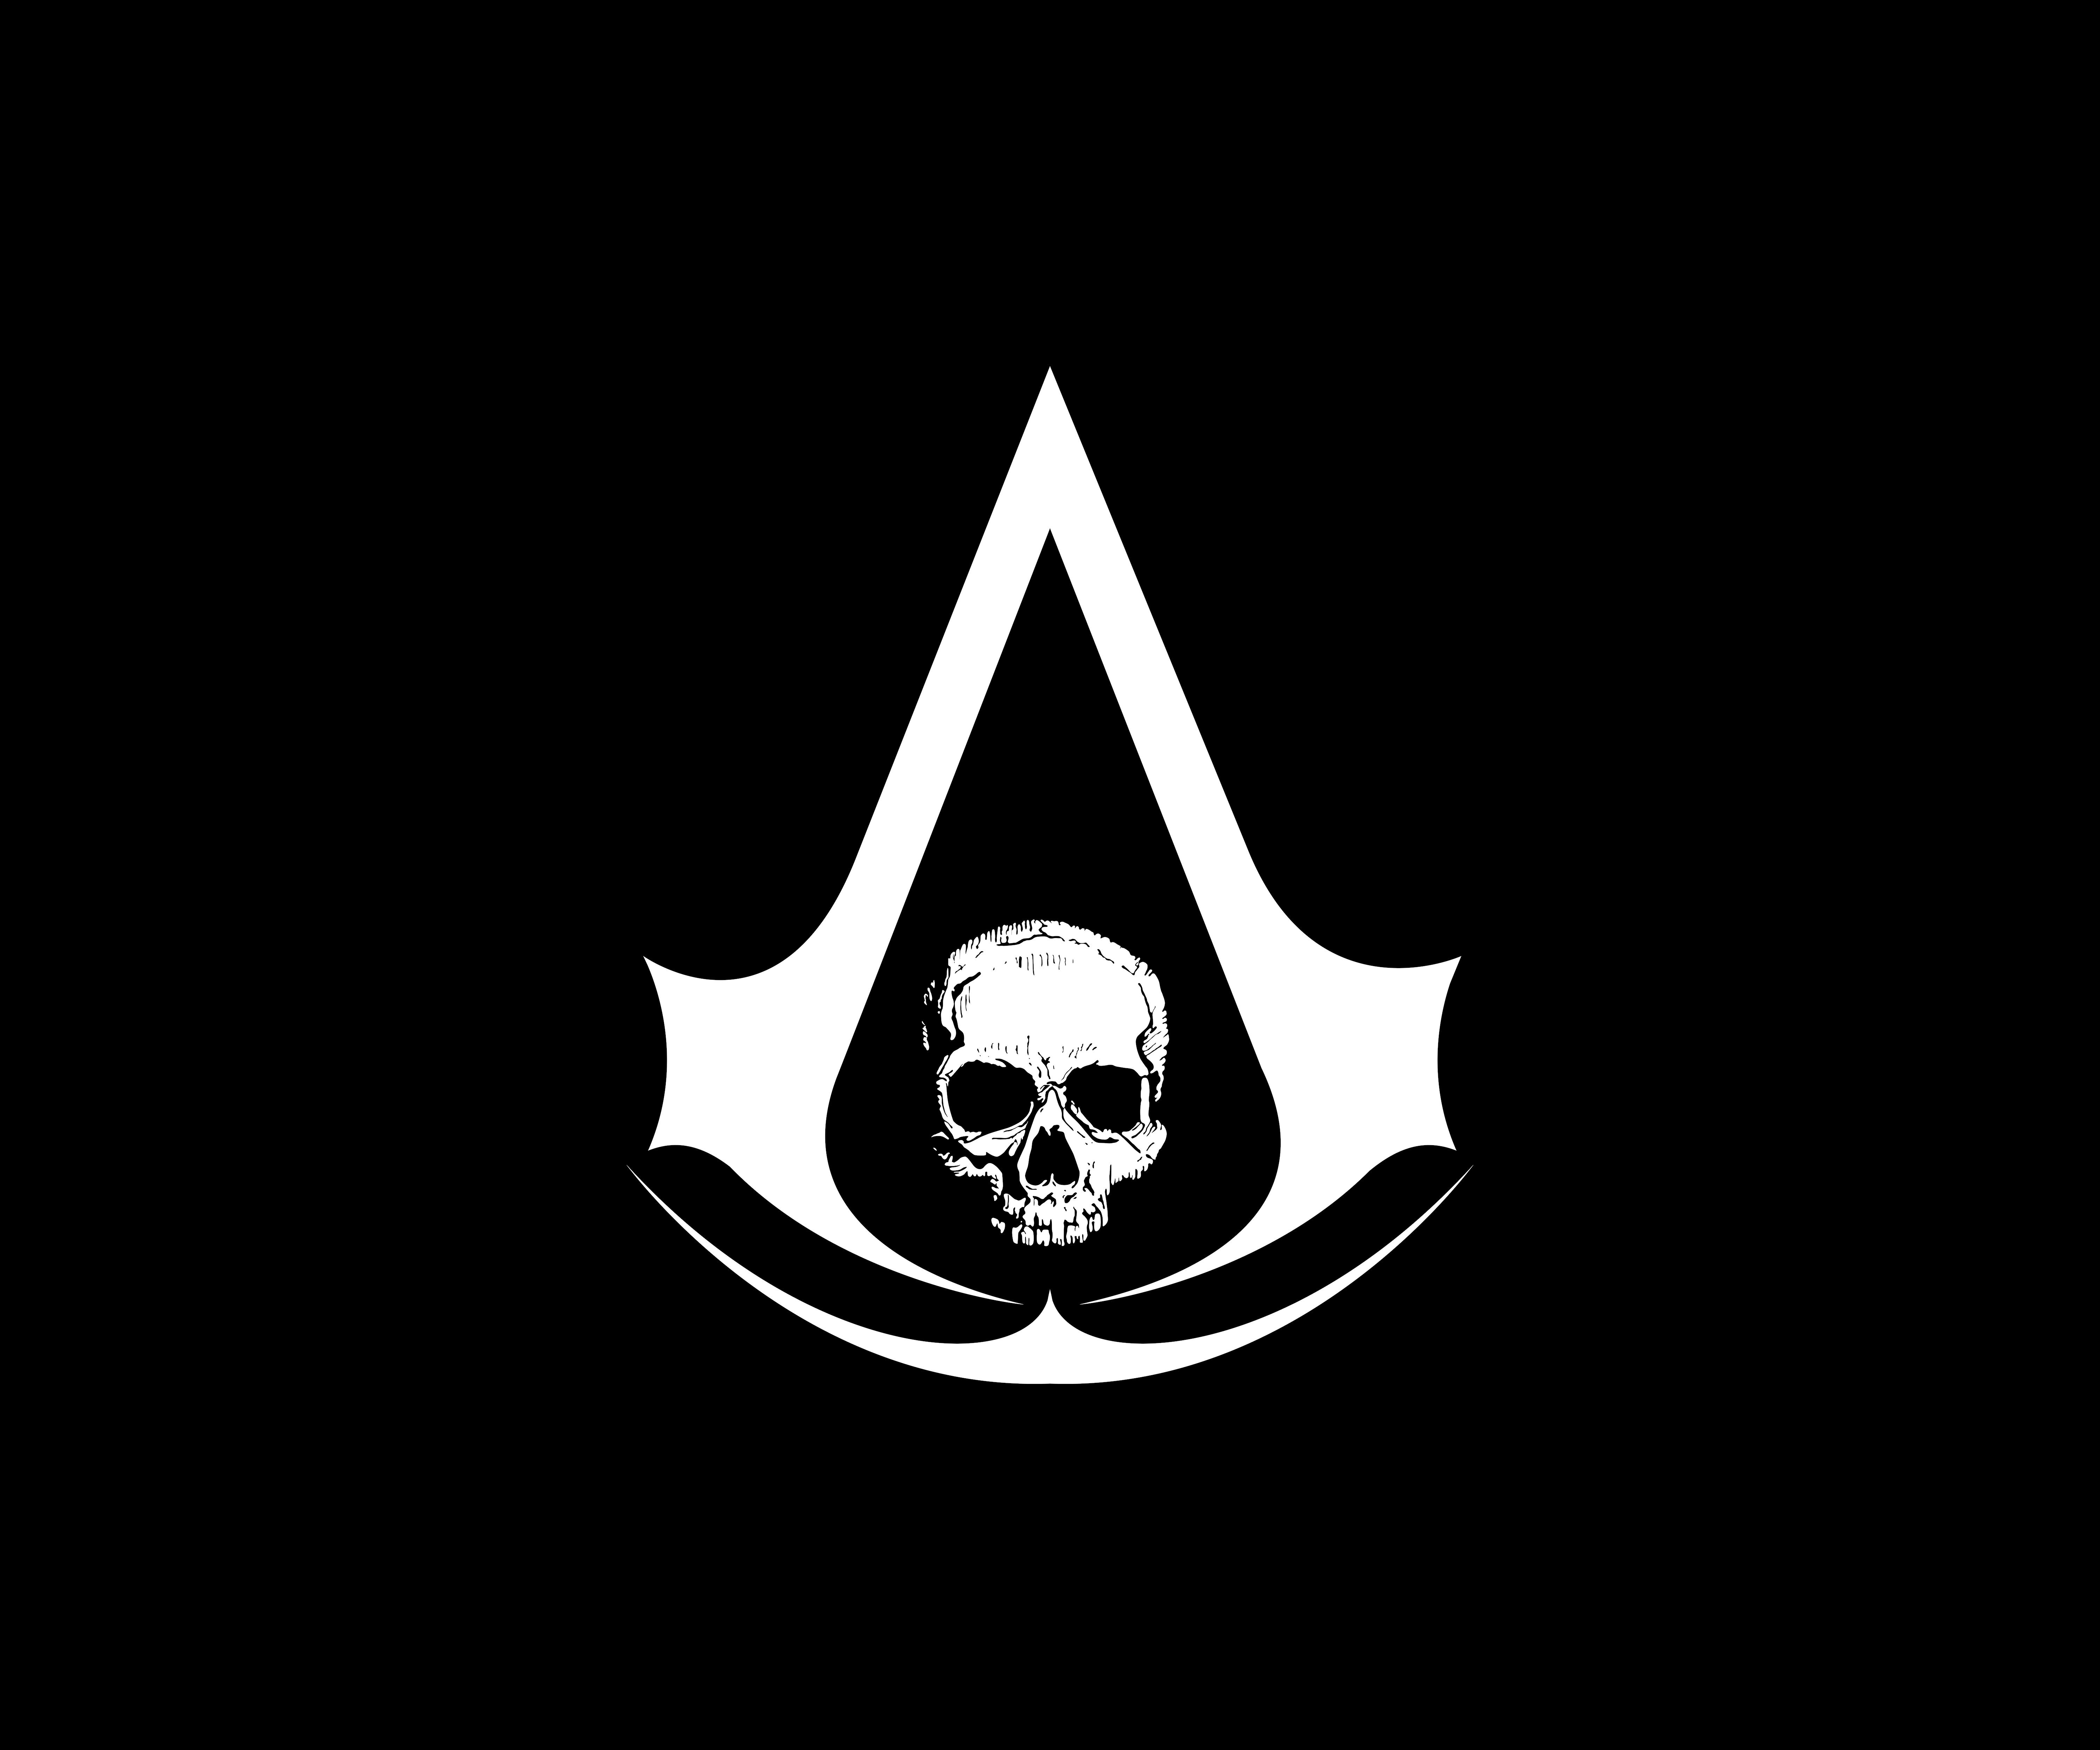 Pirates Flag Skull And Bones Skull Assassins Creed 6000x5000